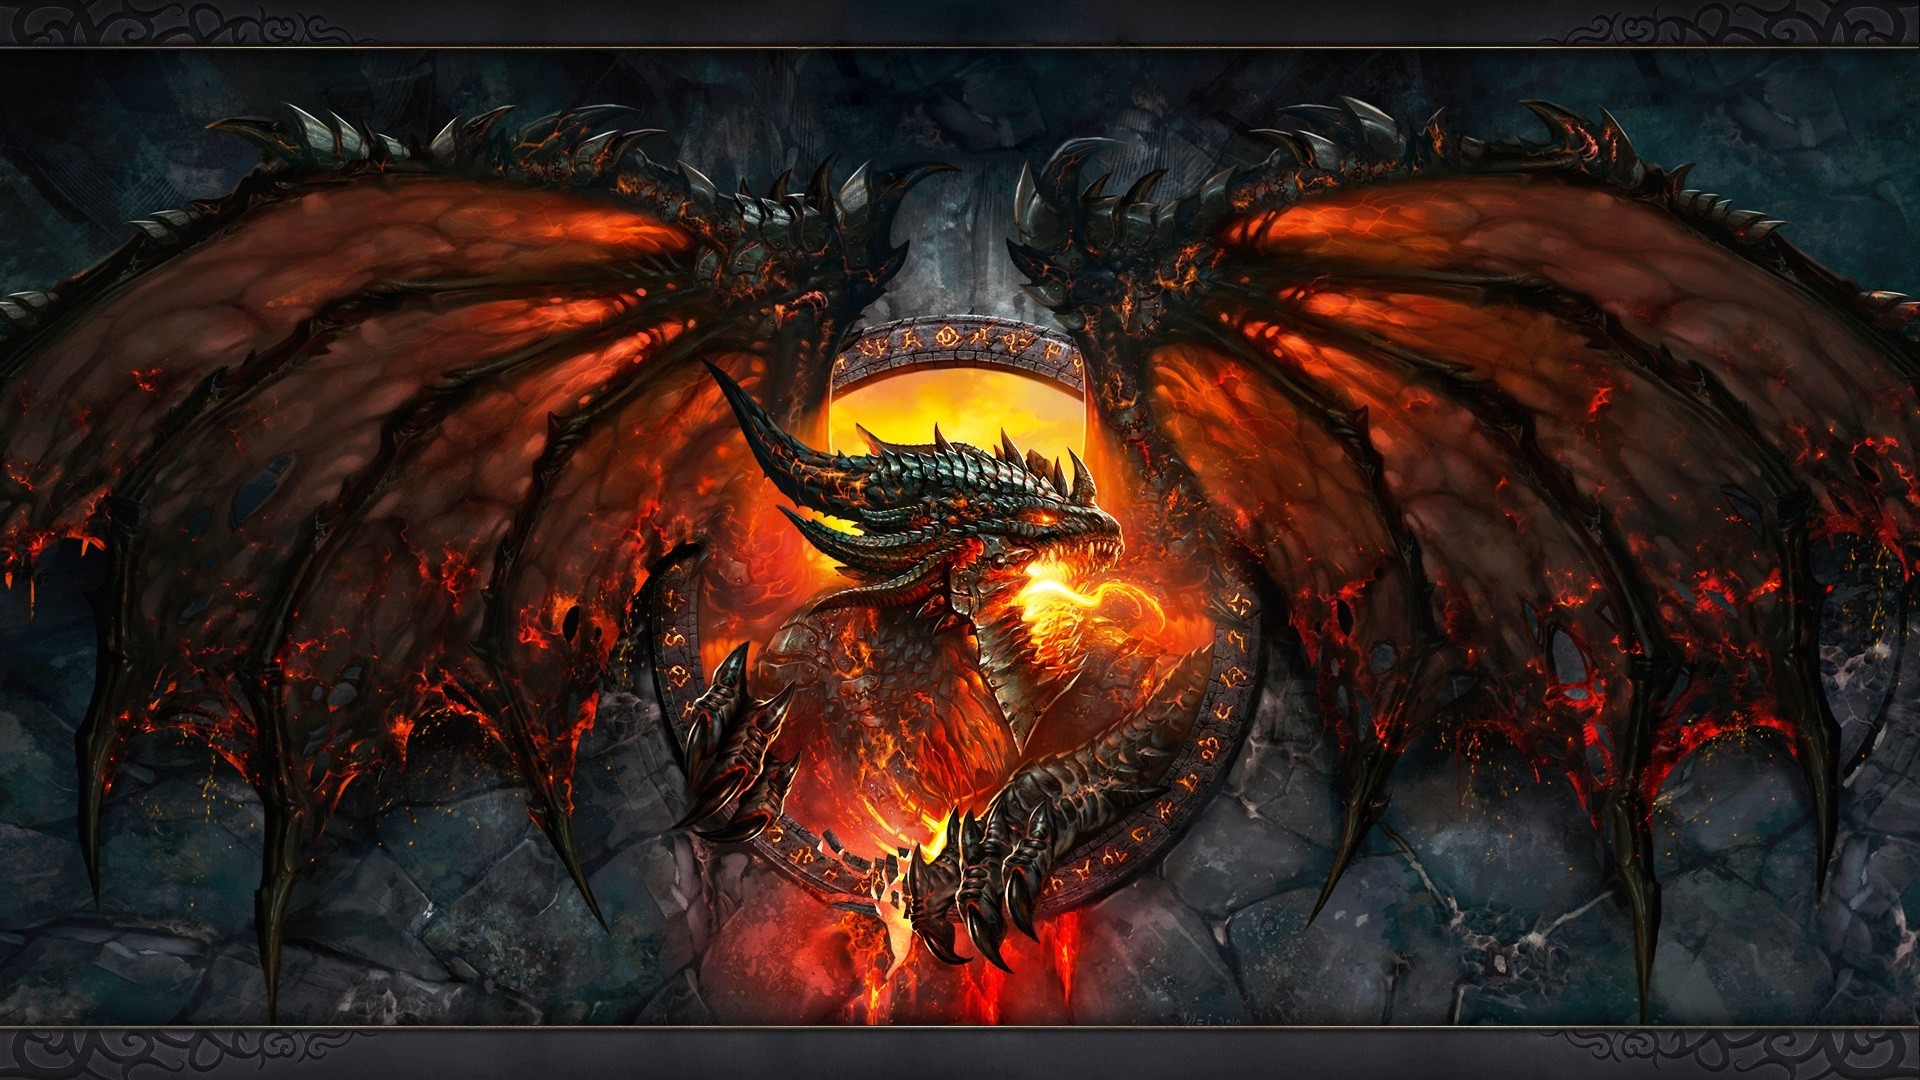 1920x1080 fantasy dragon wallpaper images